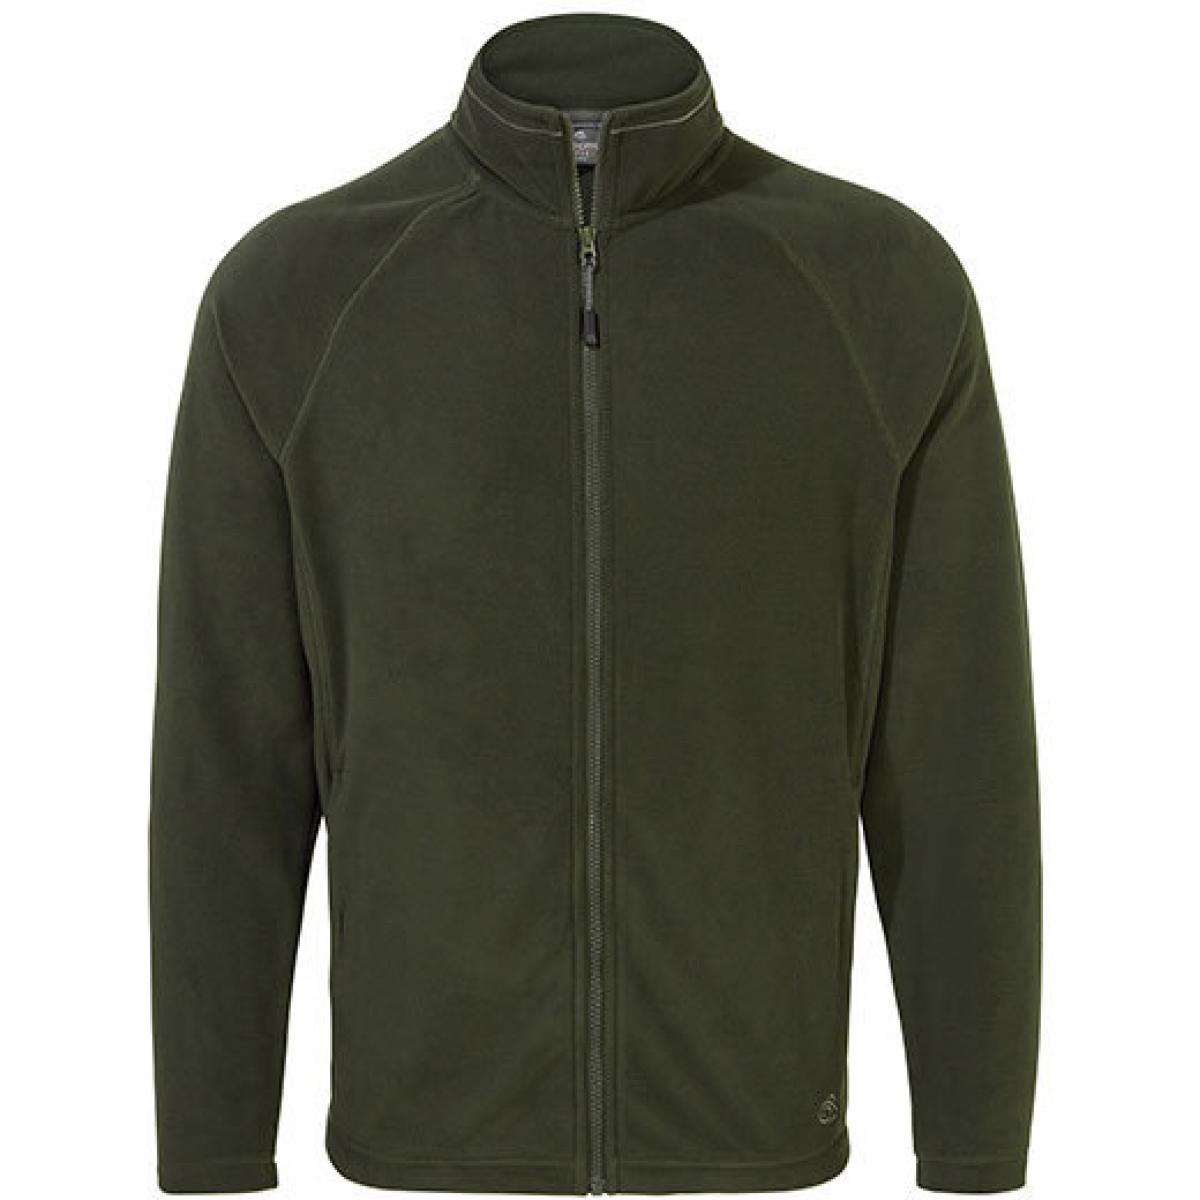 Hersteller: Craghoppers Expert Herstellernummer: CEA001 Artikelbezeichnung: Expert Corey 200 Fleece Jacket Farbe: Dark Cedar Green